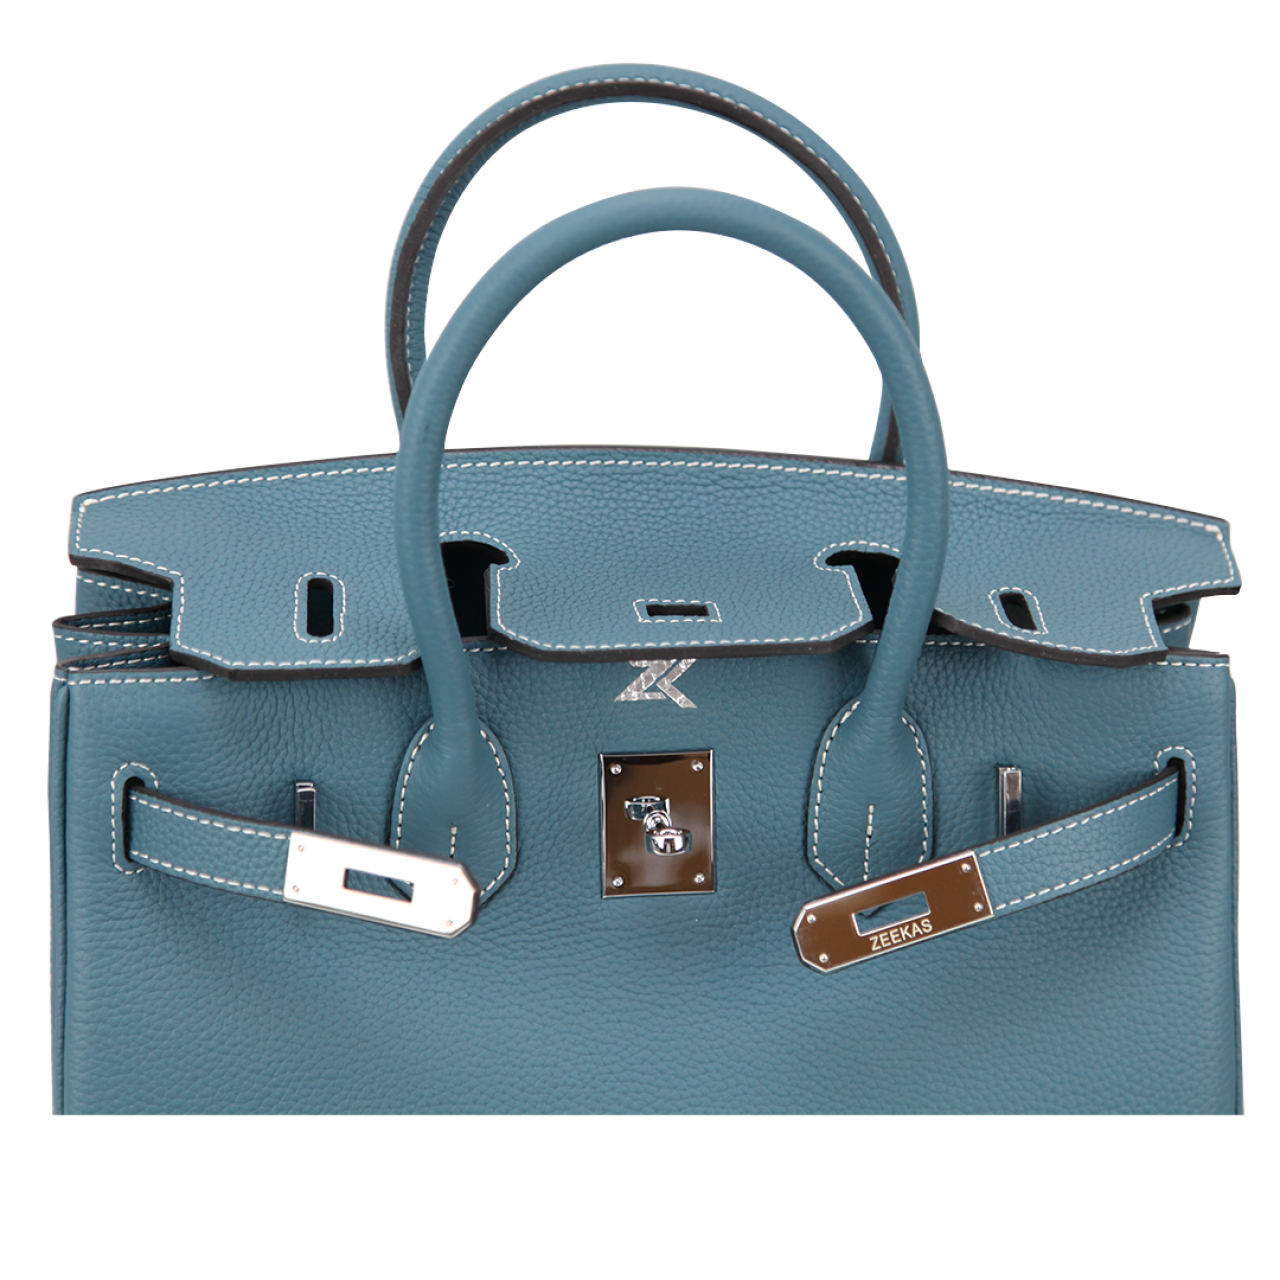 Zeekas Women Satchel Purse Silver Hardware Belted Top-handle PU Leather Blue Tote Shoulder Bag